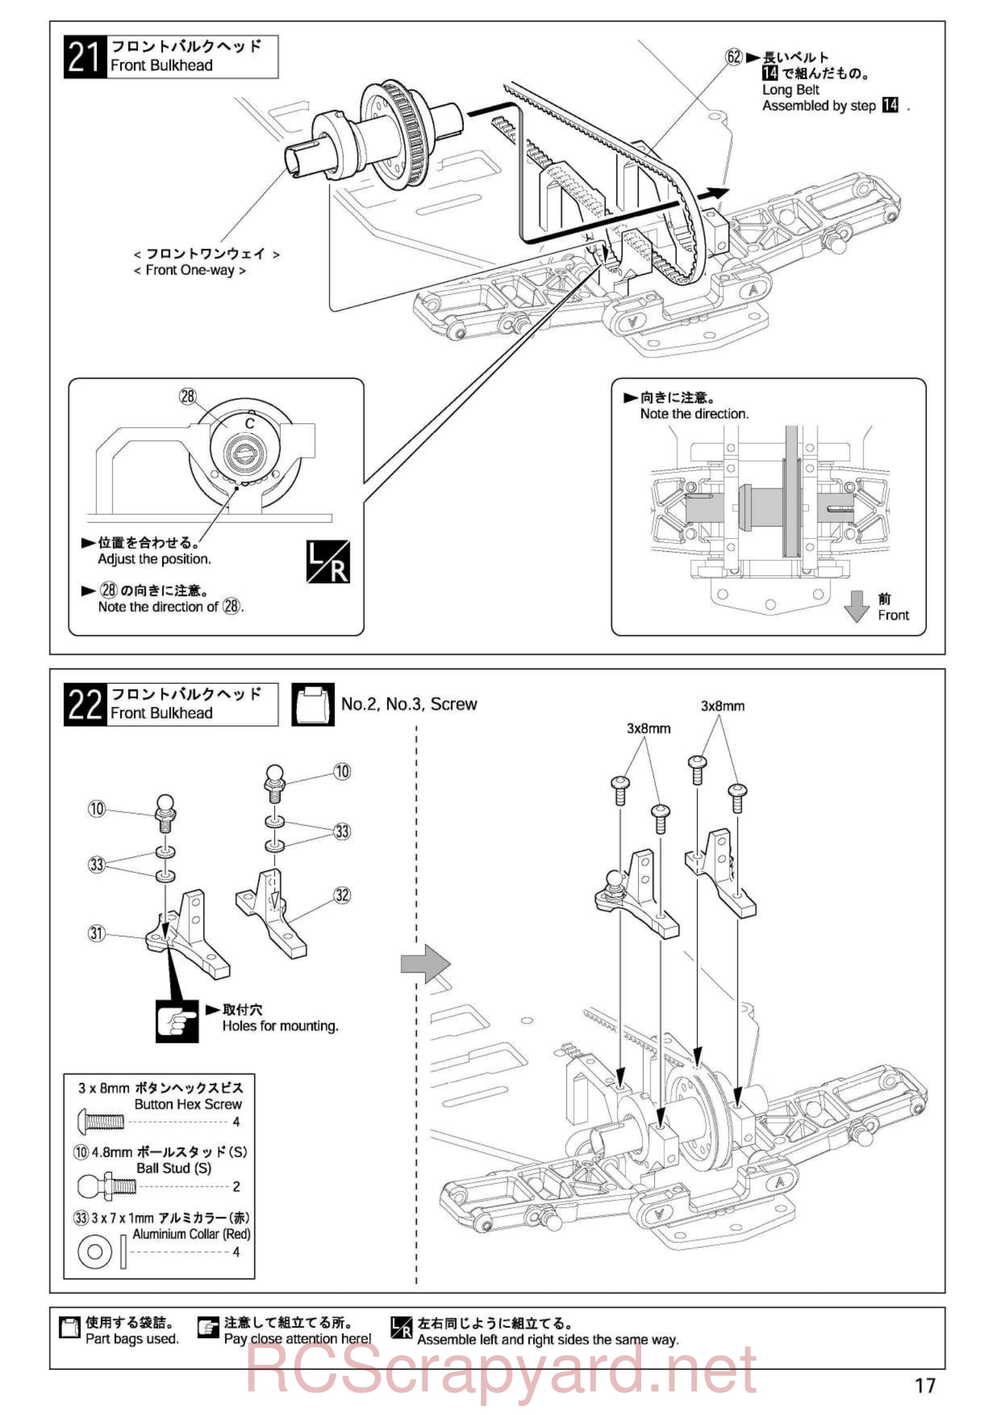 Kyosho - 30023 - Stalion-Shin - Manual - Page 17